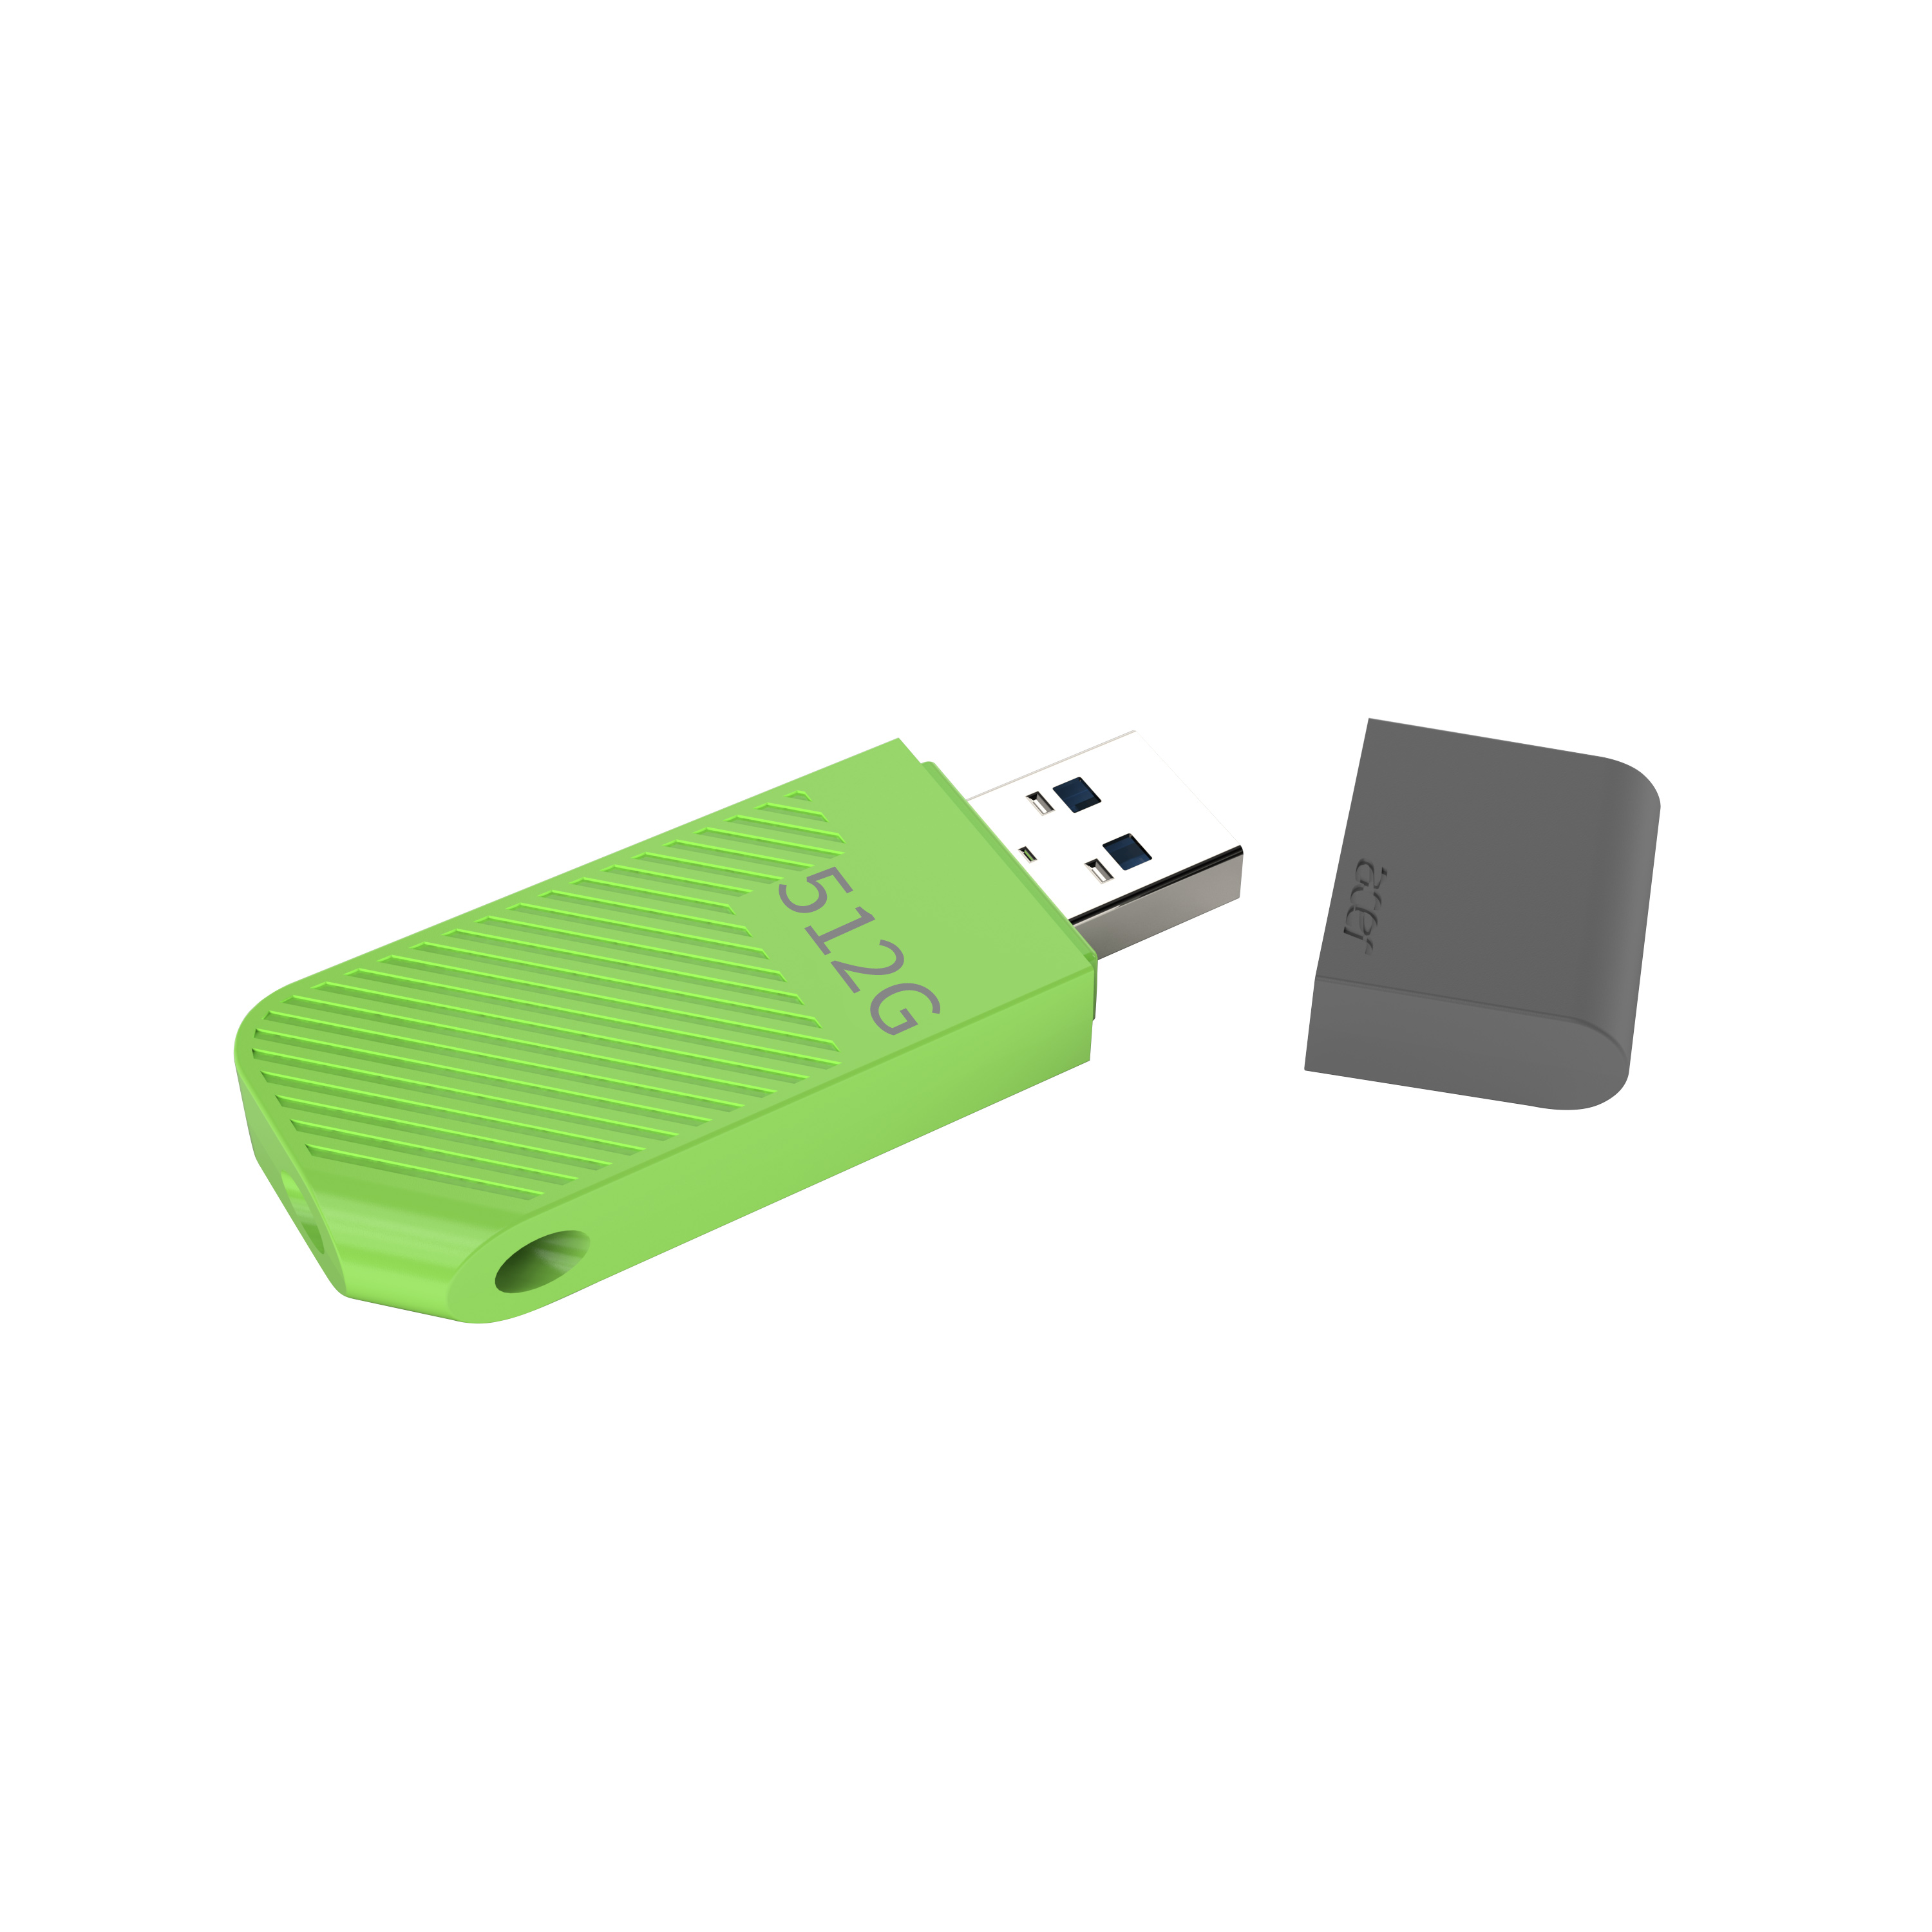 Acer USB Flash Drive